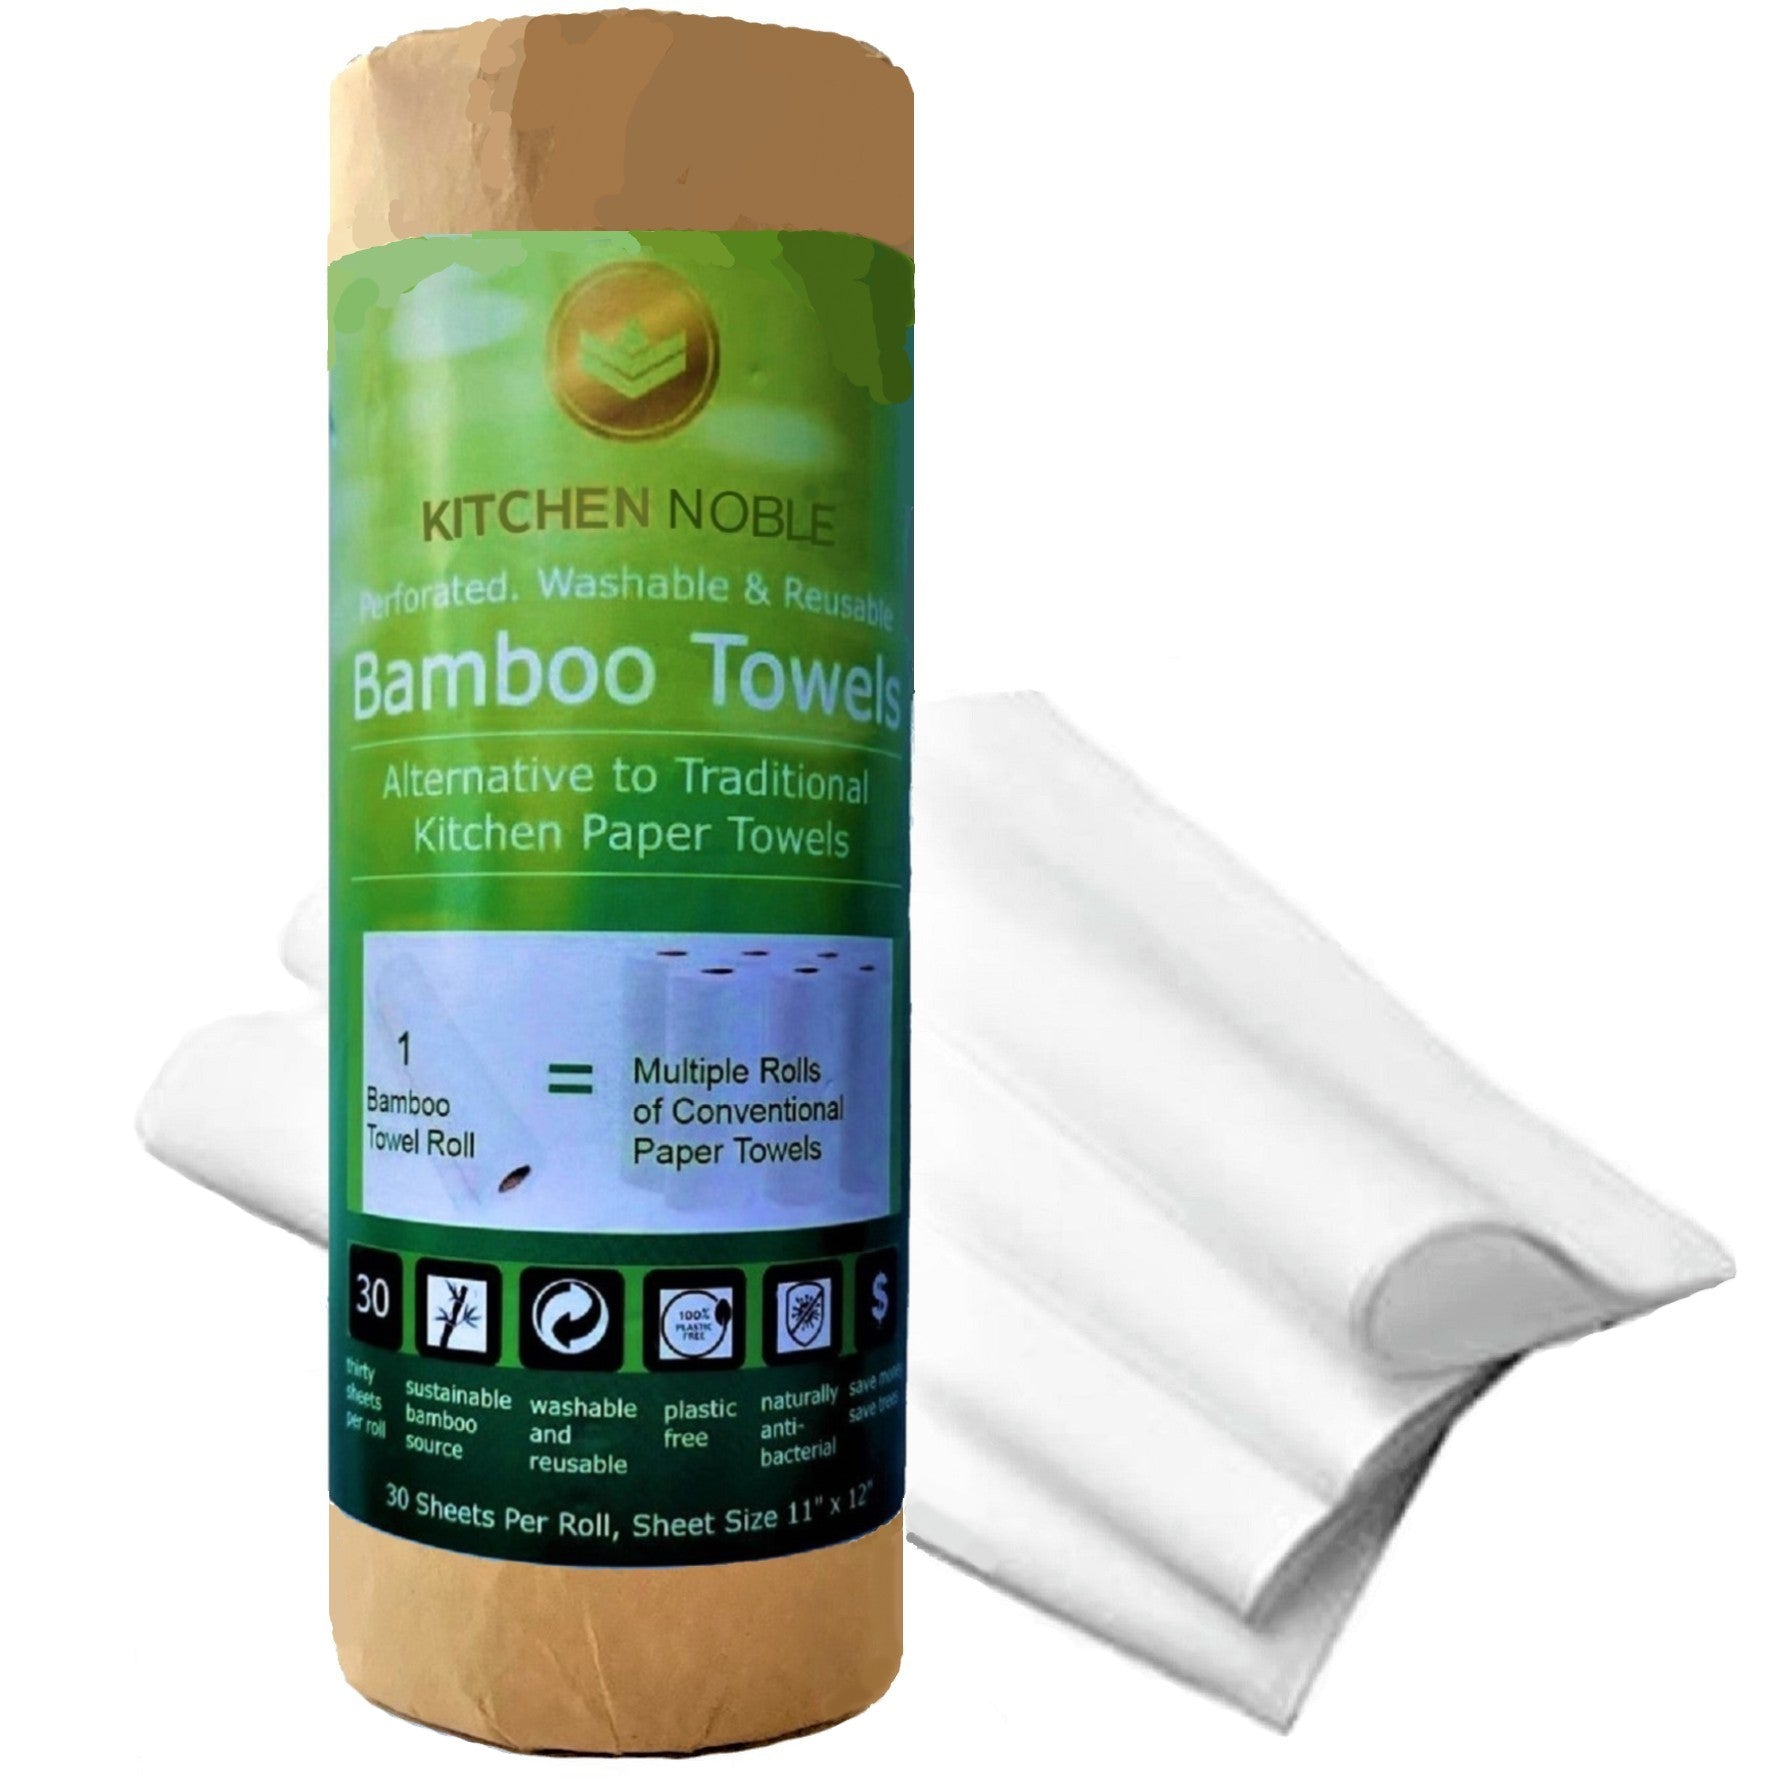 Reusable Paper Towel Alternatives